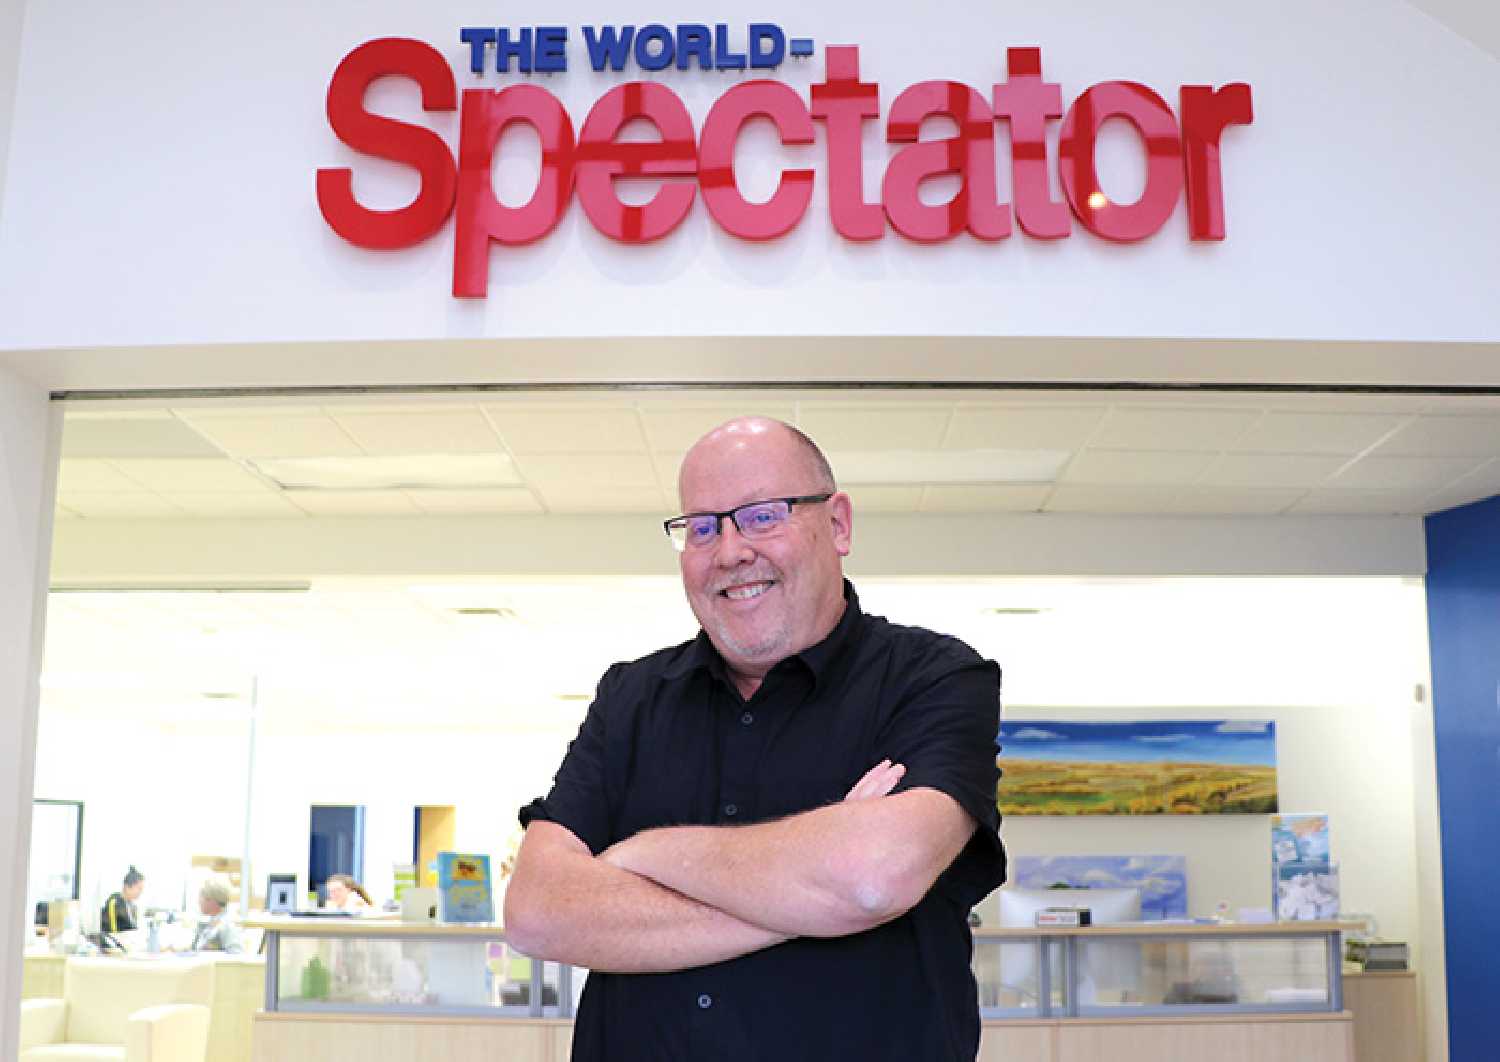 The World-Spectator - Moosomin, Saskatchewan, Canada